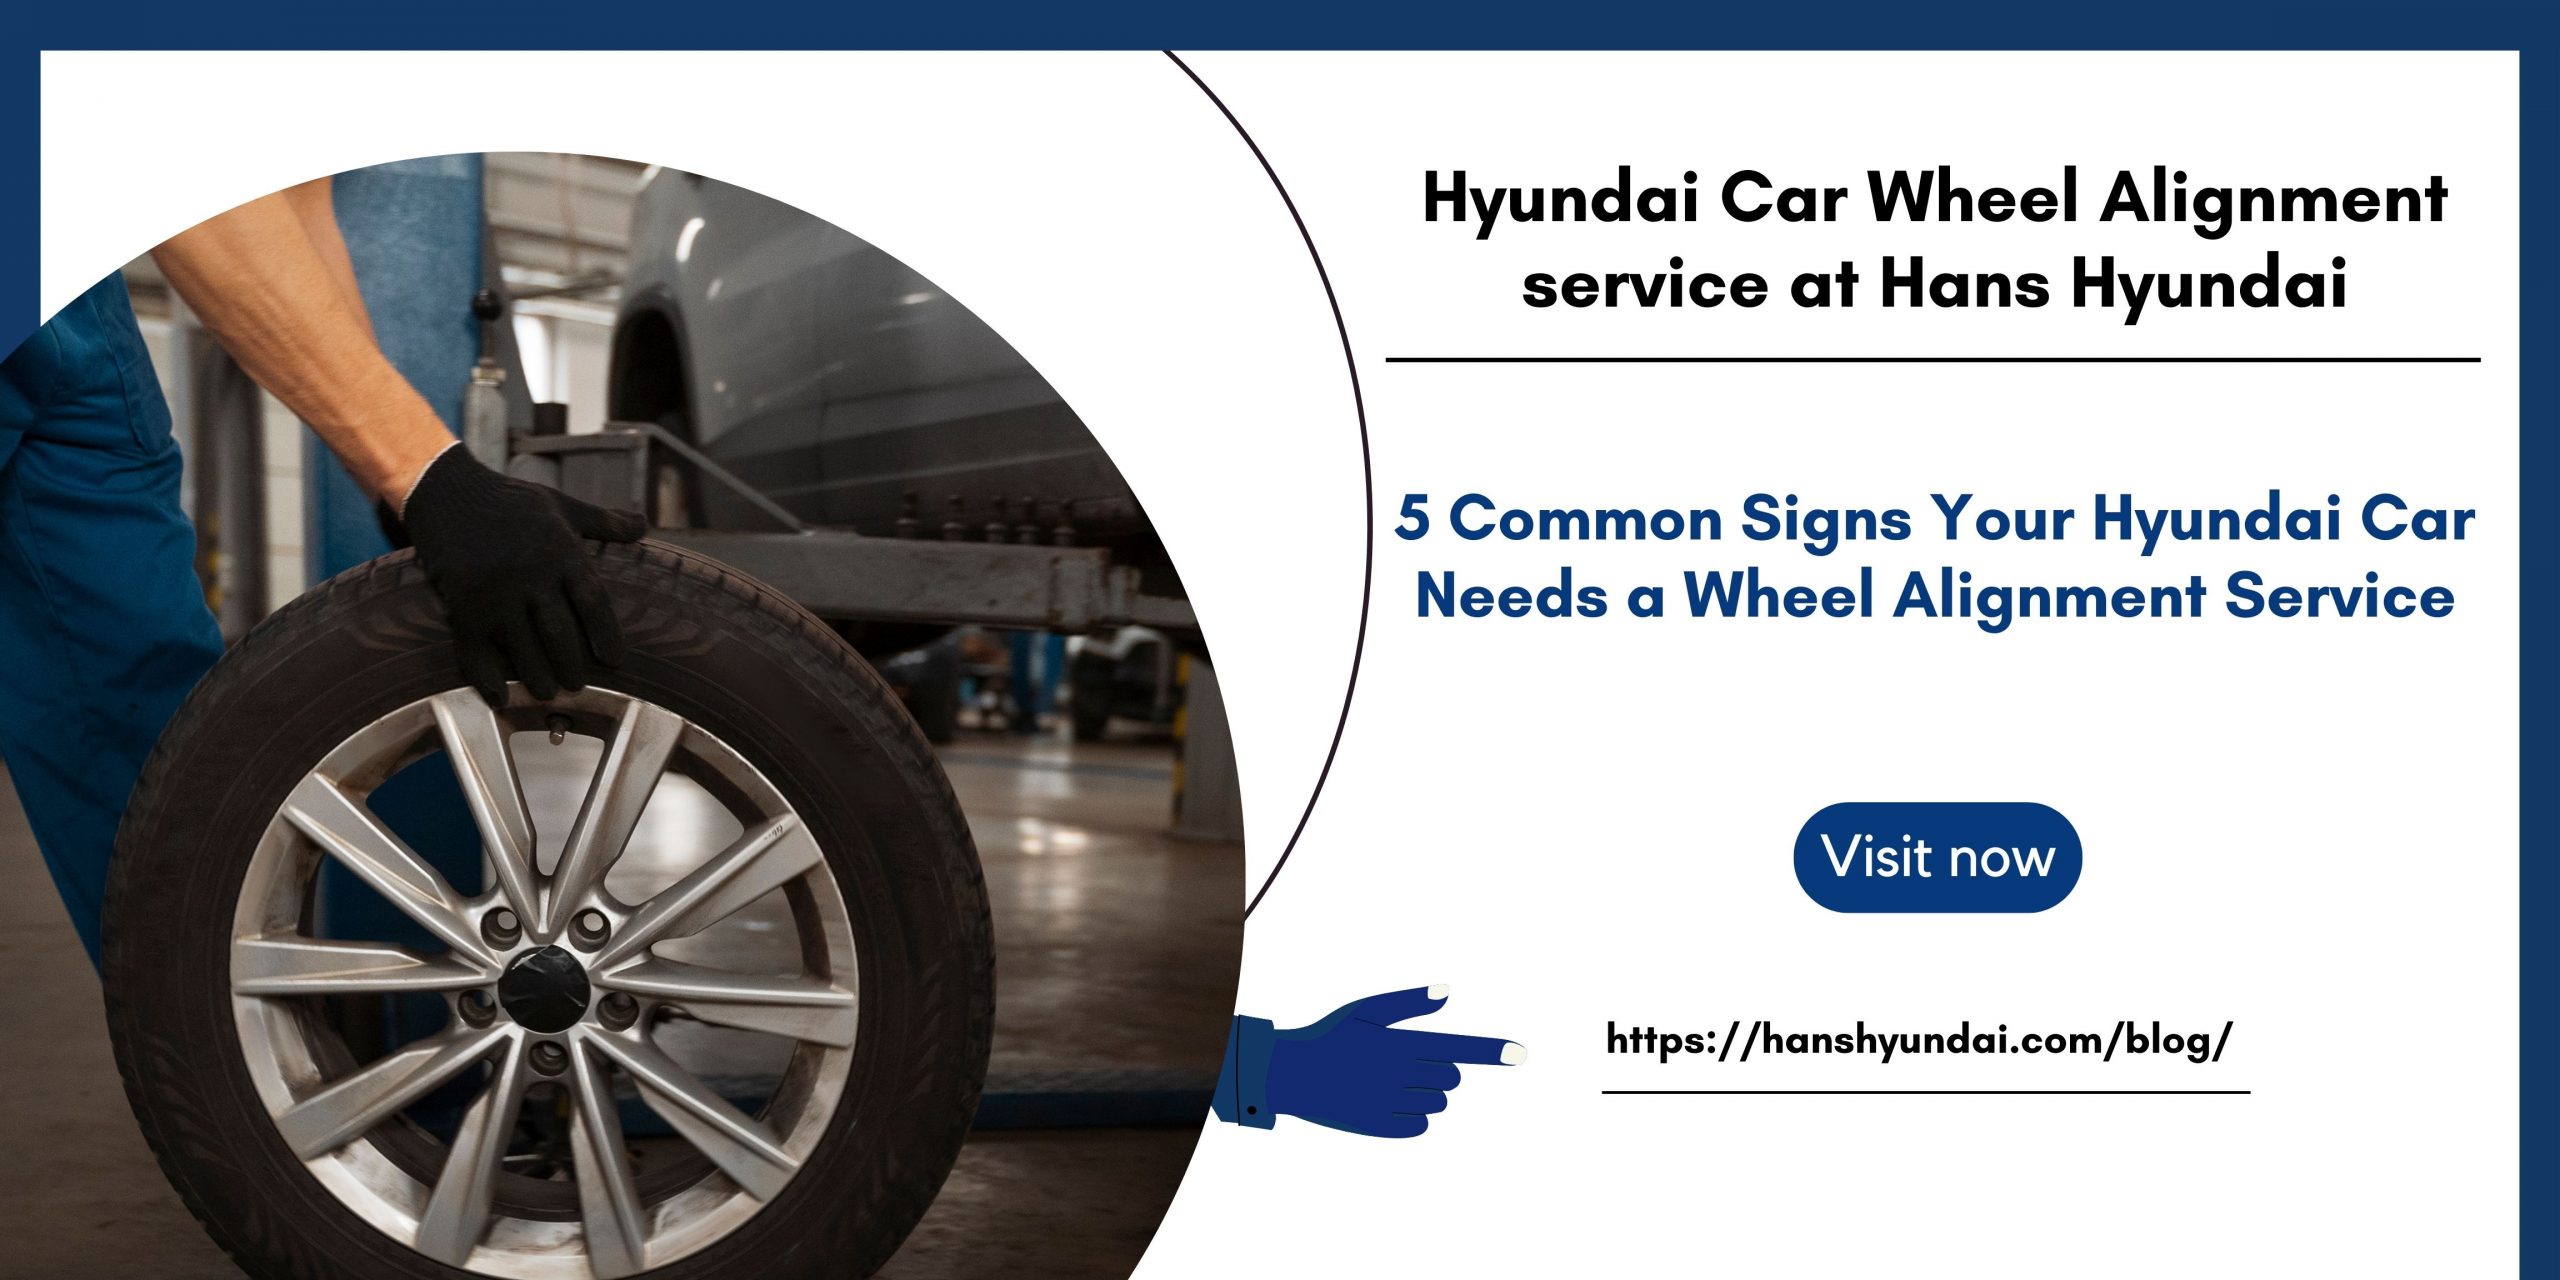 Hyundai car wheel alignment service